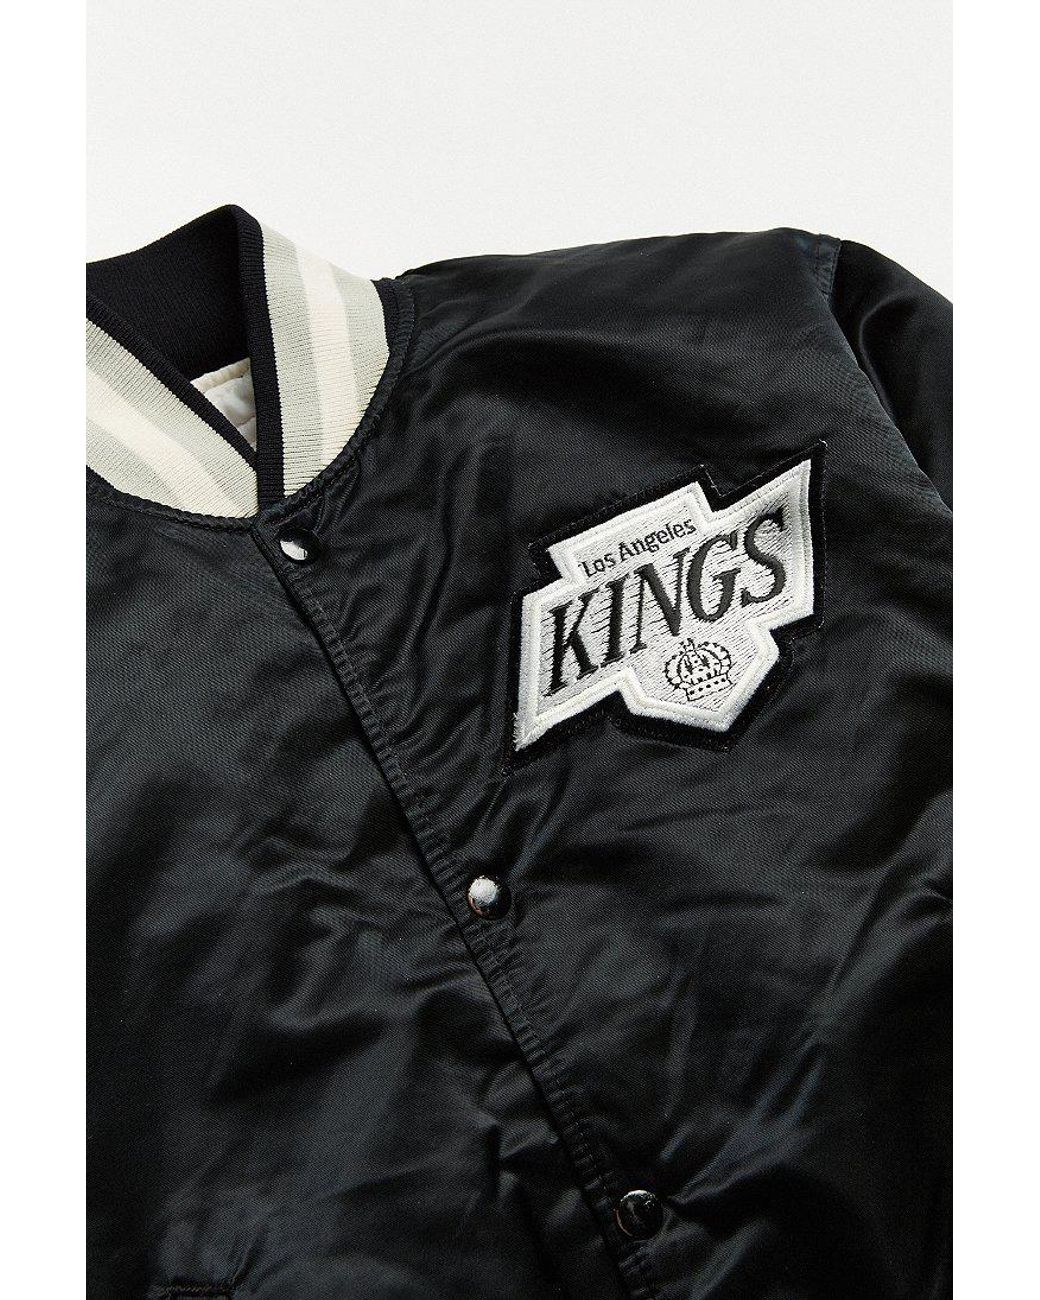 Vintage starter jacket n cap los angeles kings, Men's Fashion